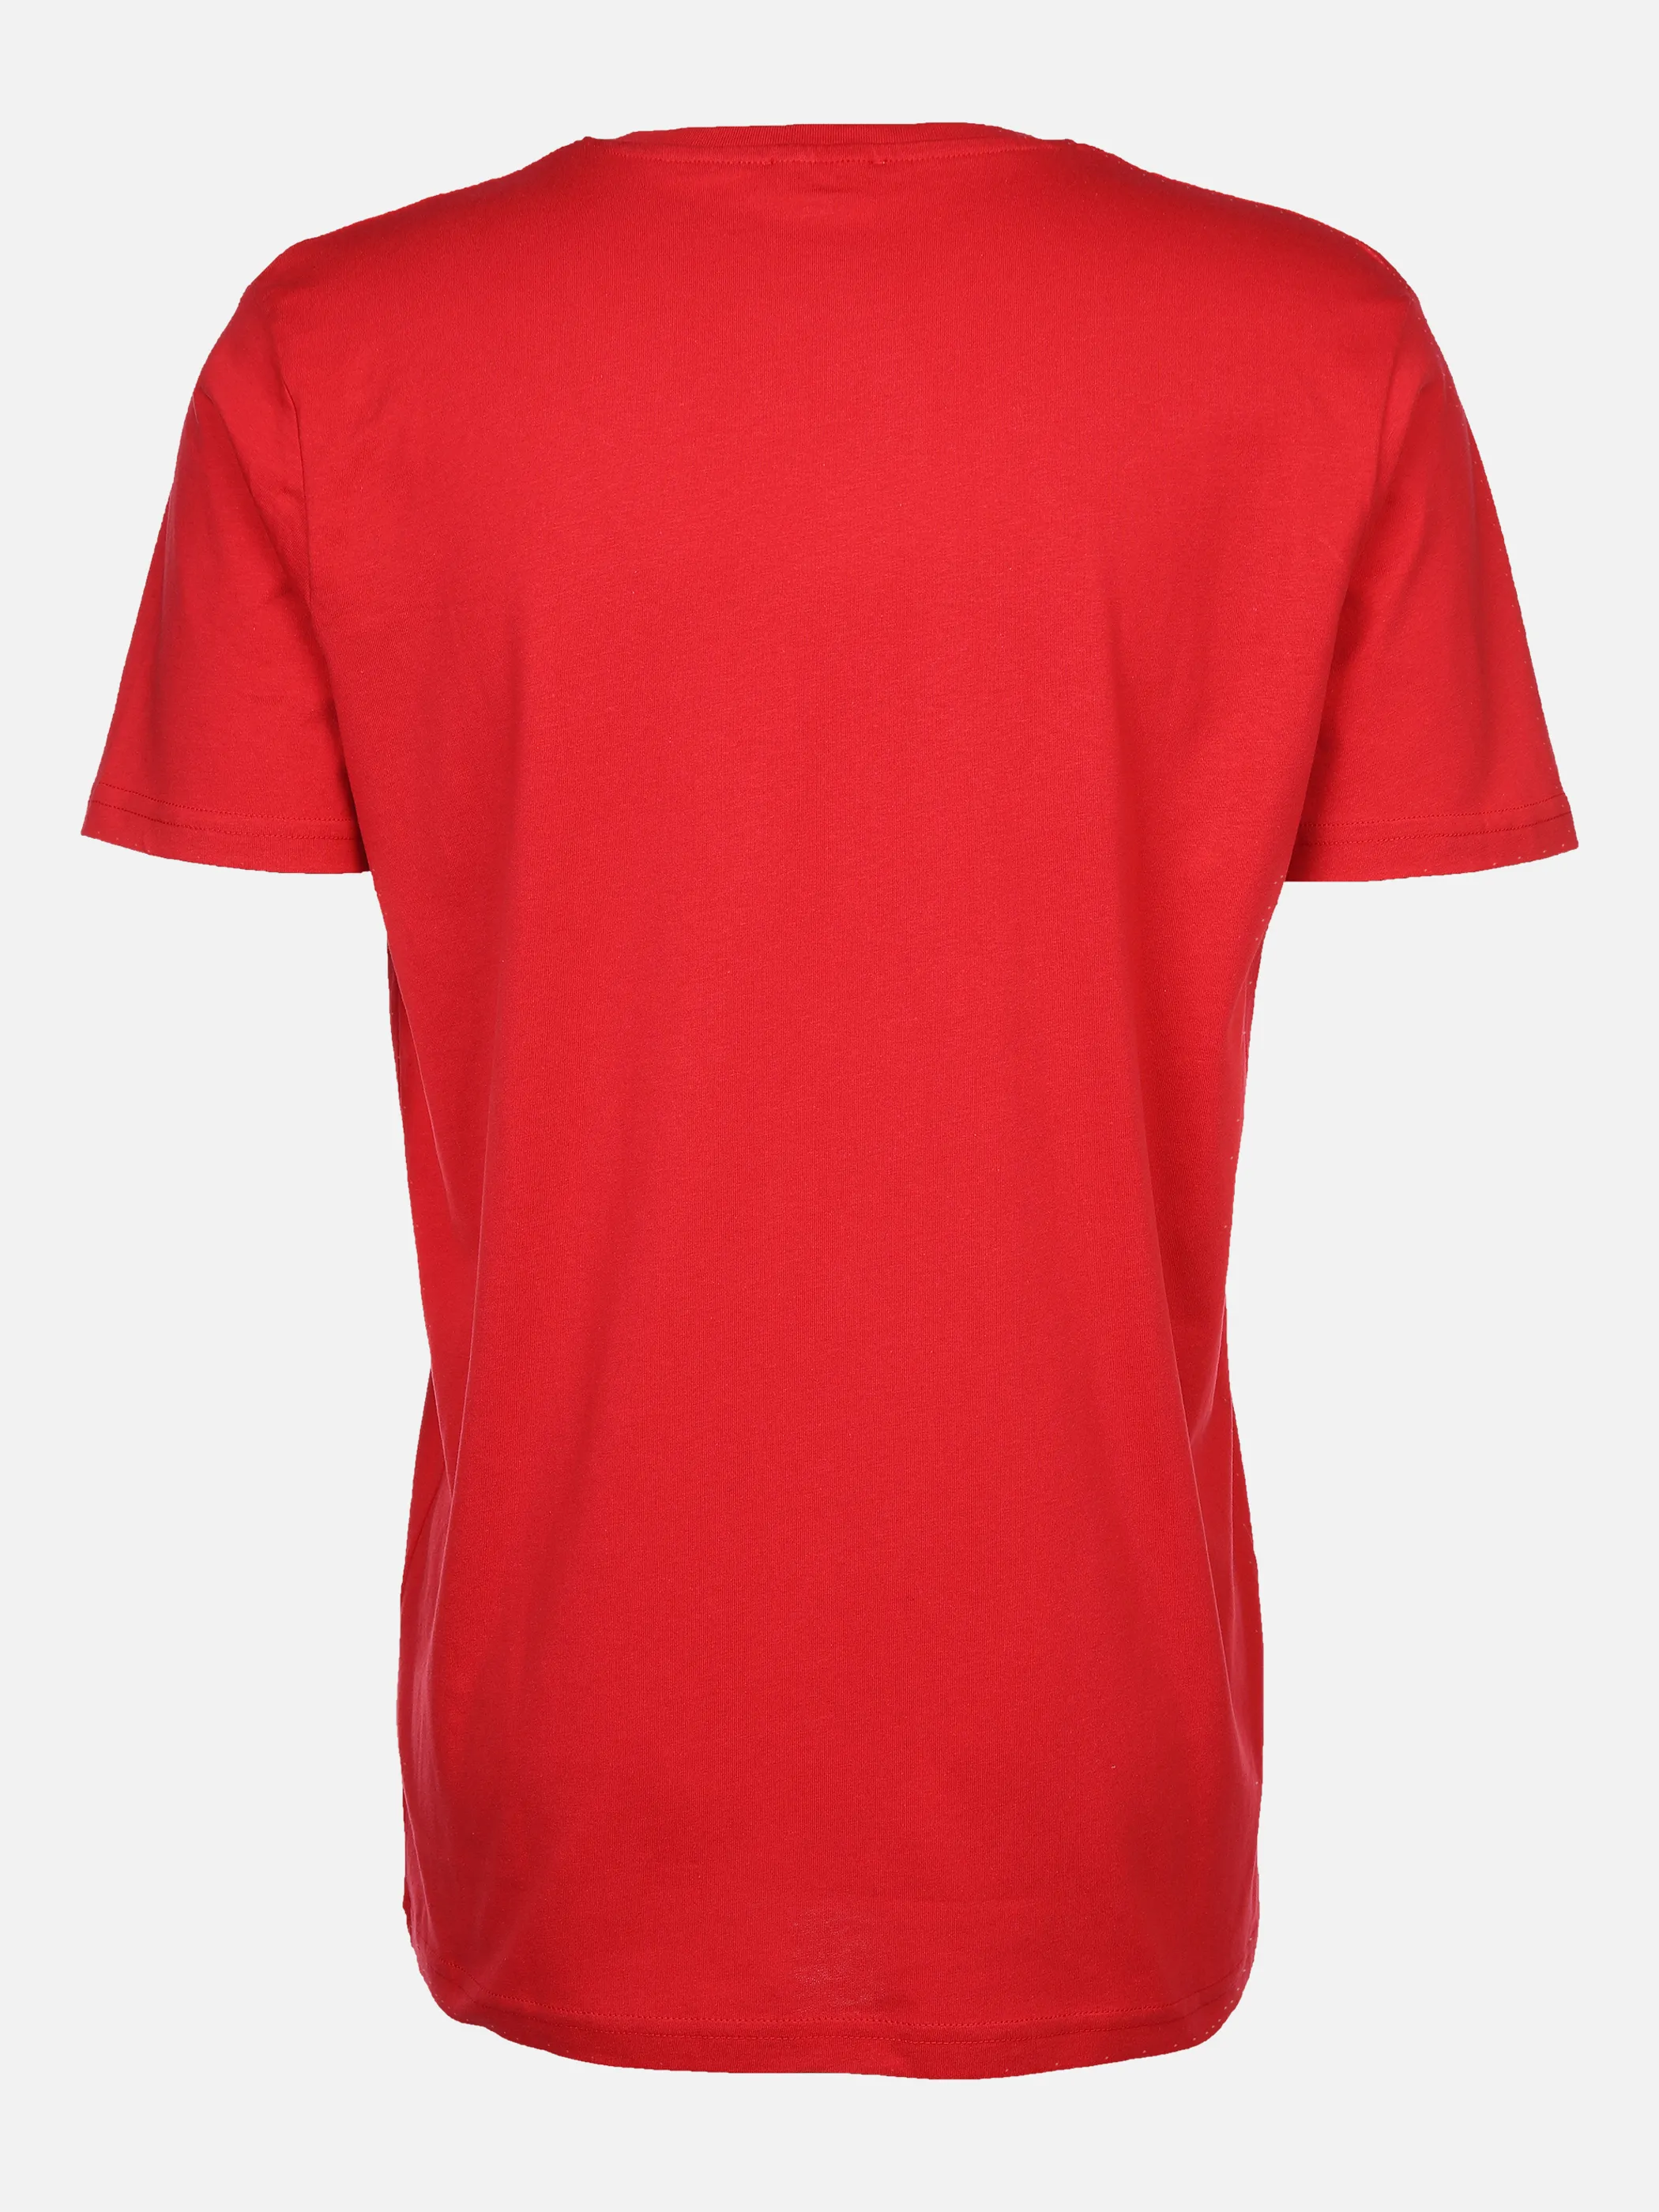 U.S. Polo Assn. He. T-Shirt 1/2 Arm Logo 1890 Rot 881277 RED 2